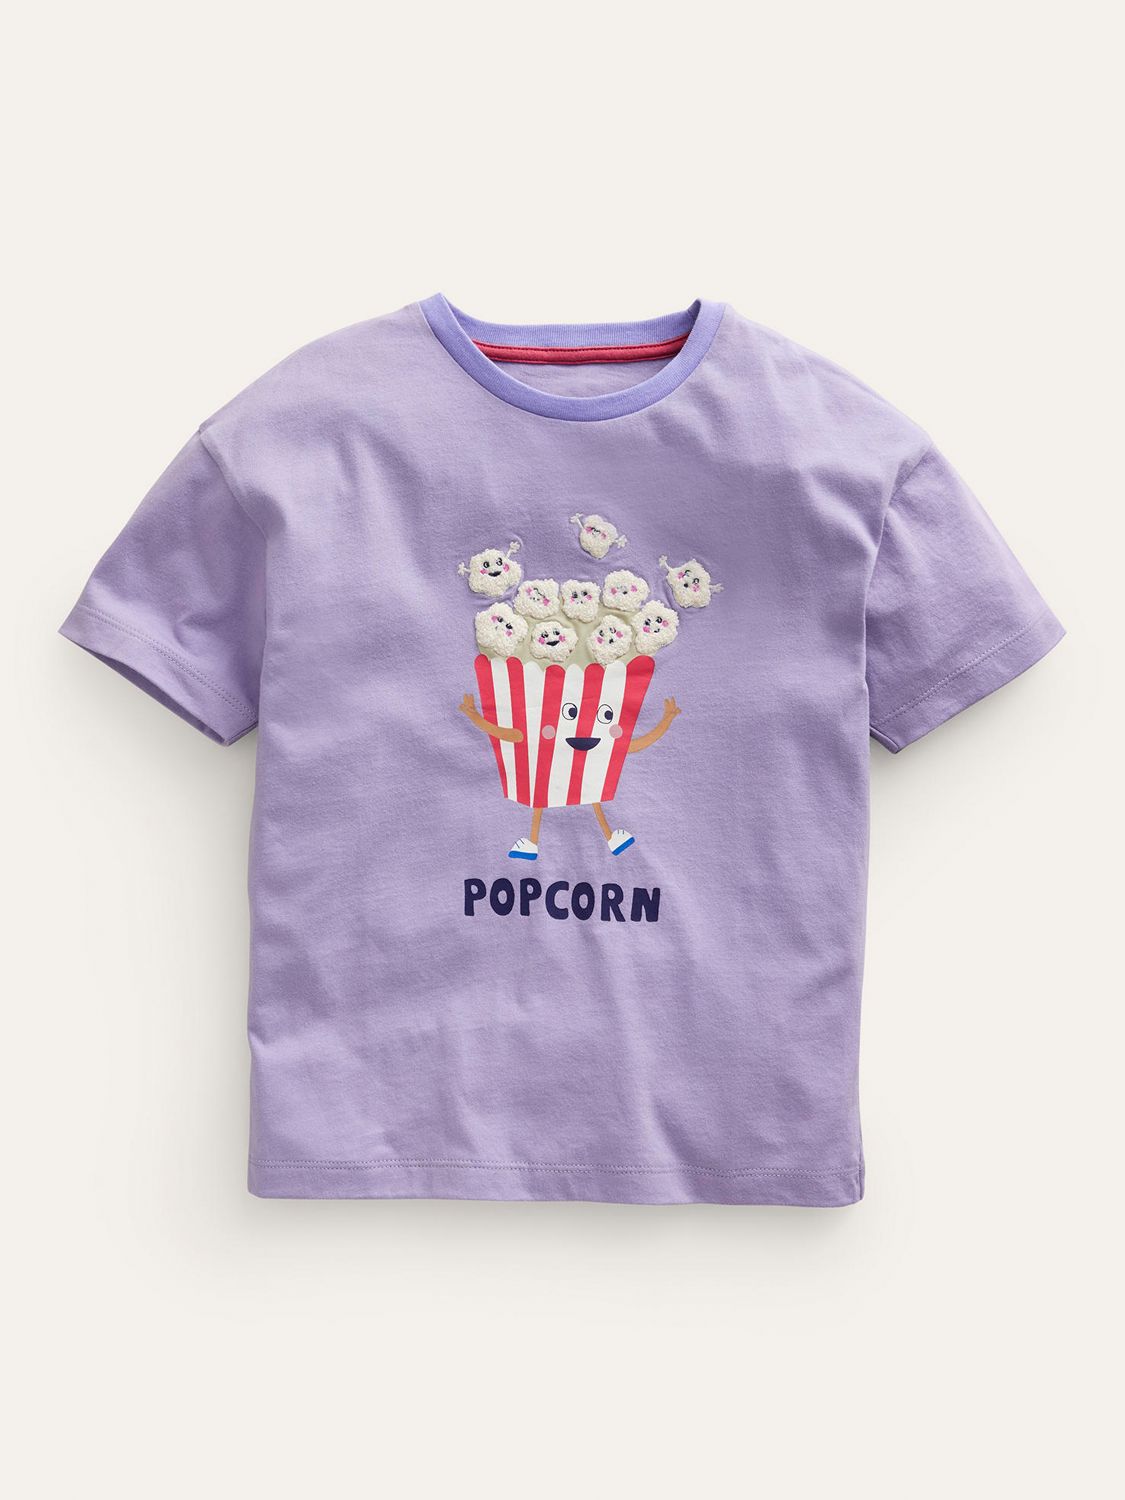 Mini Boden Kids' Popcorn Boucle T-Shirt, Lavender, 2-3 years